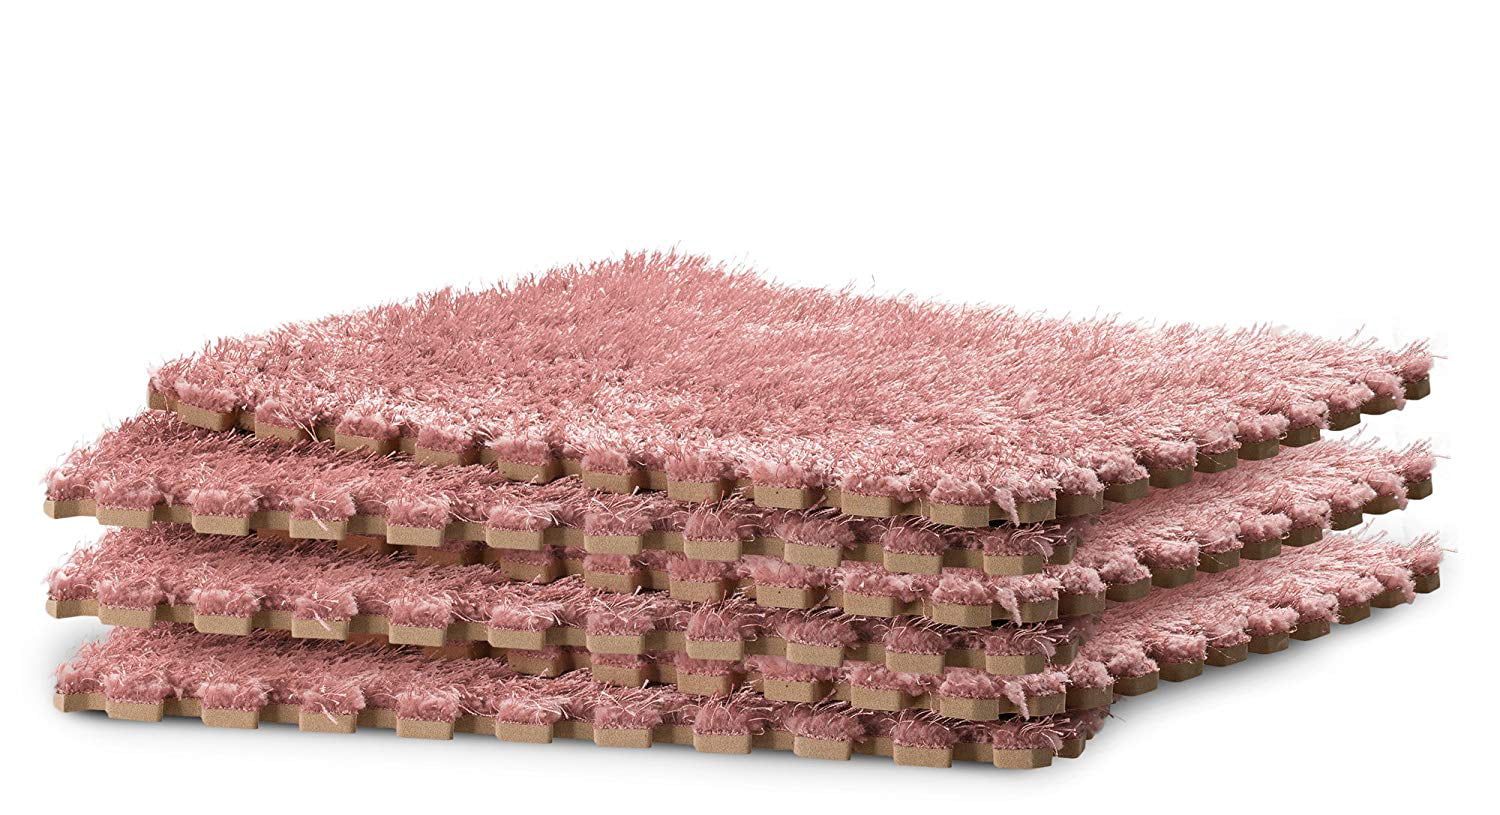 Anti-slip & Durable Rug Ideal for Nursery DÃ©cor Pink Playroom and Kids Room Plush 9 Fluffy Carpet Tiles for Kids Baby Room HemingWeigh Fuzzy Area Rug Velvet-like Texture 